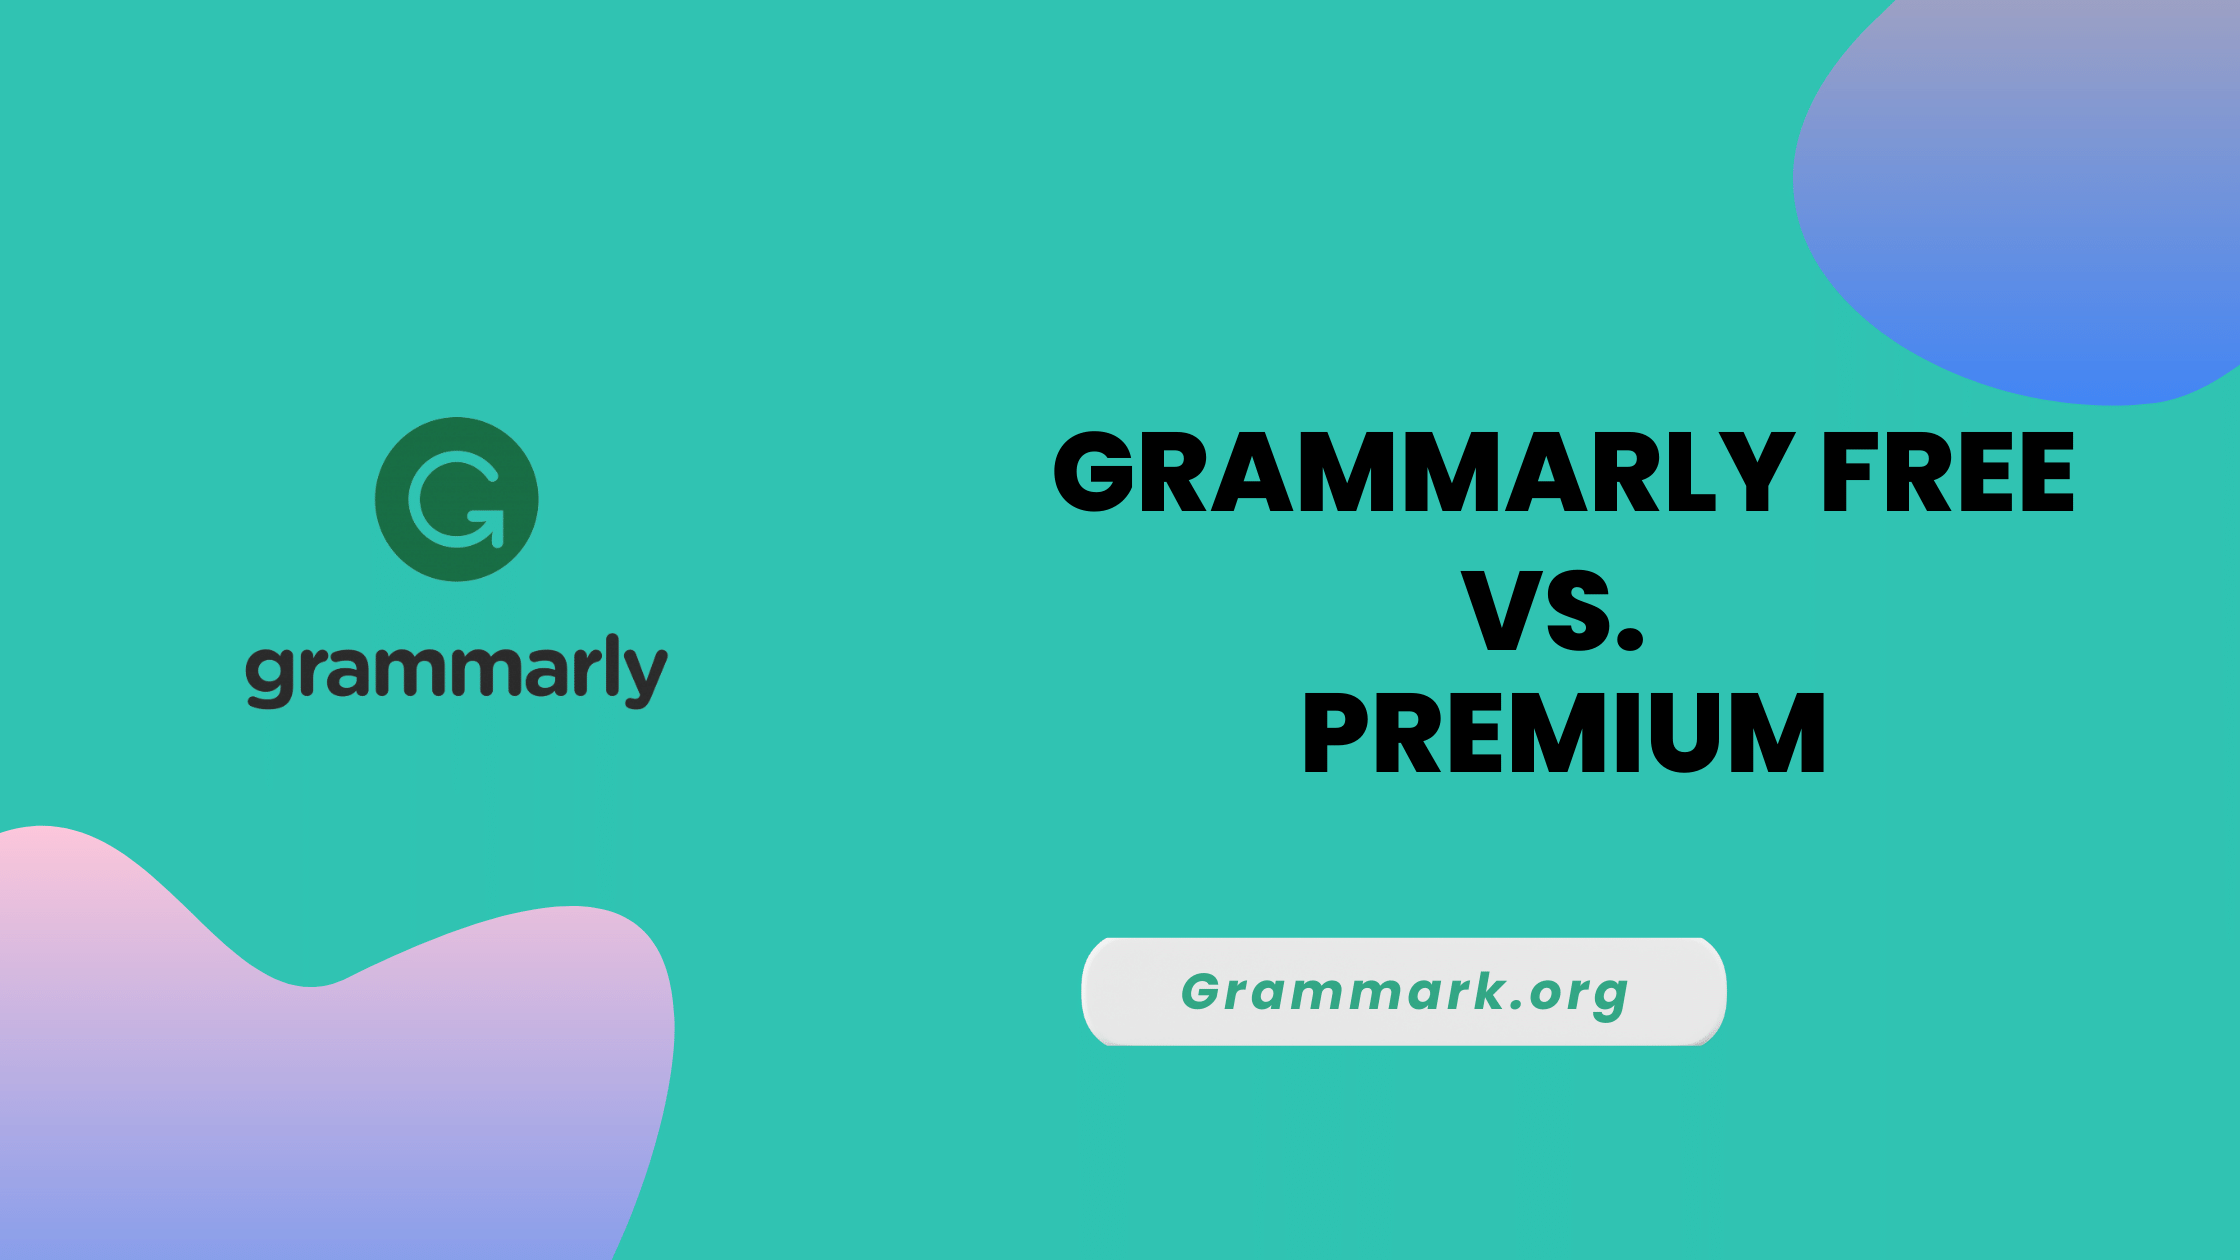 premium grammarly free reddit